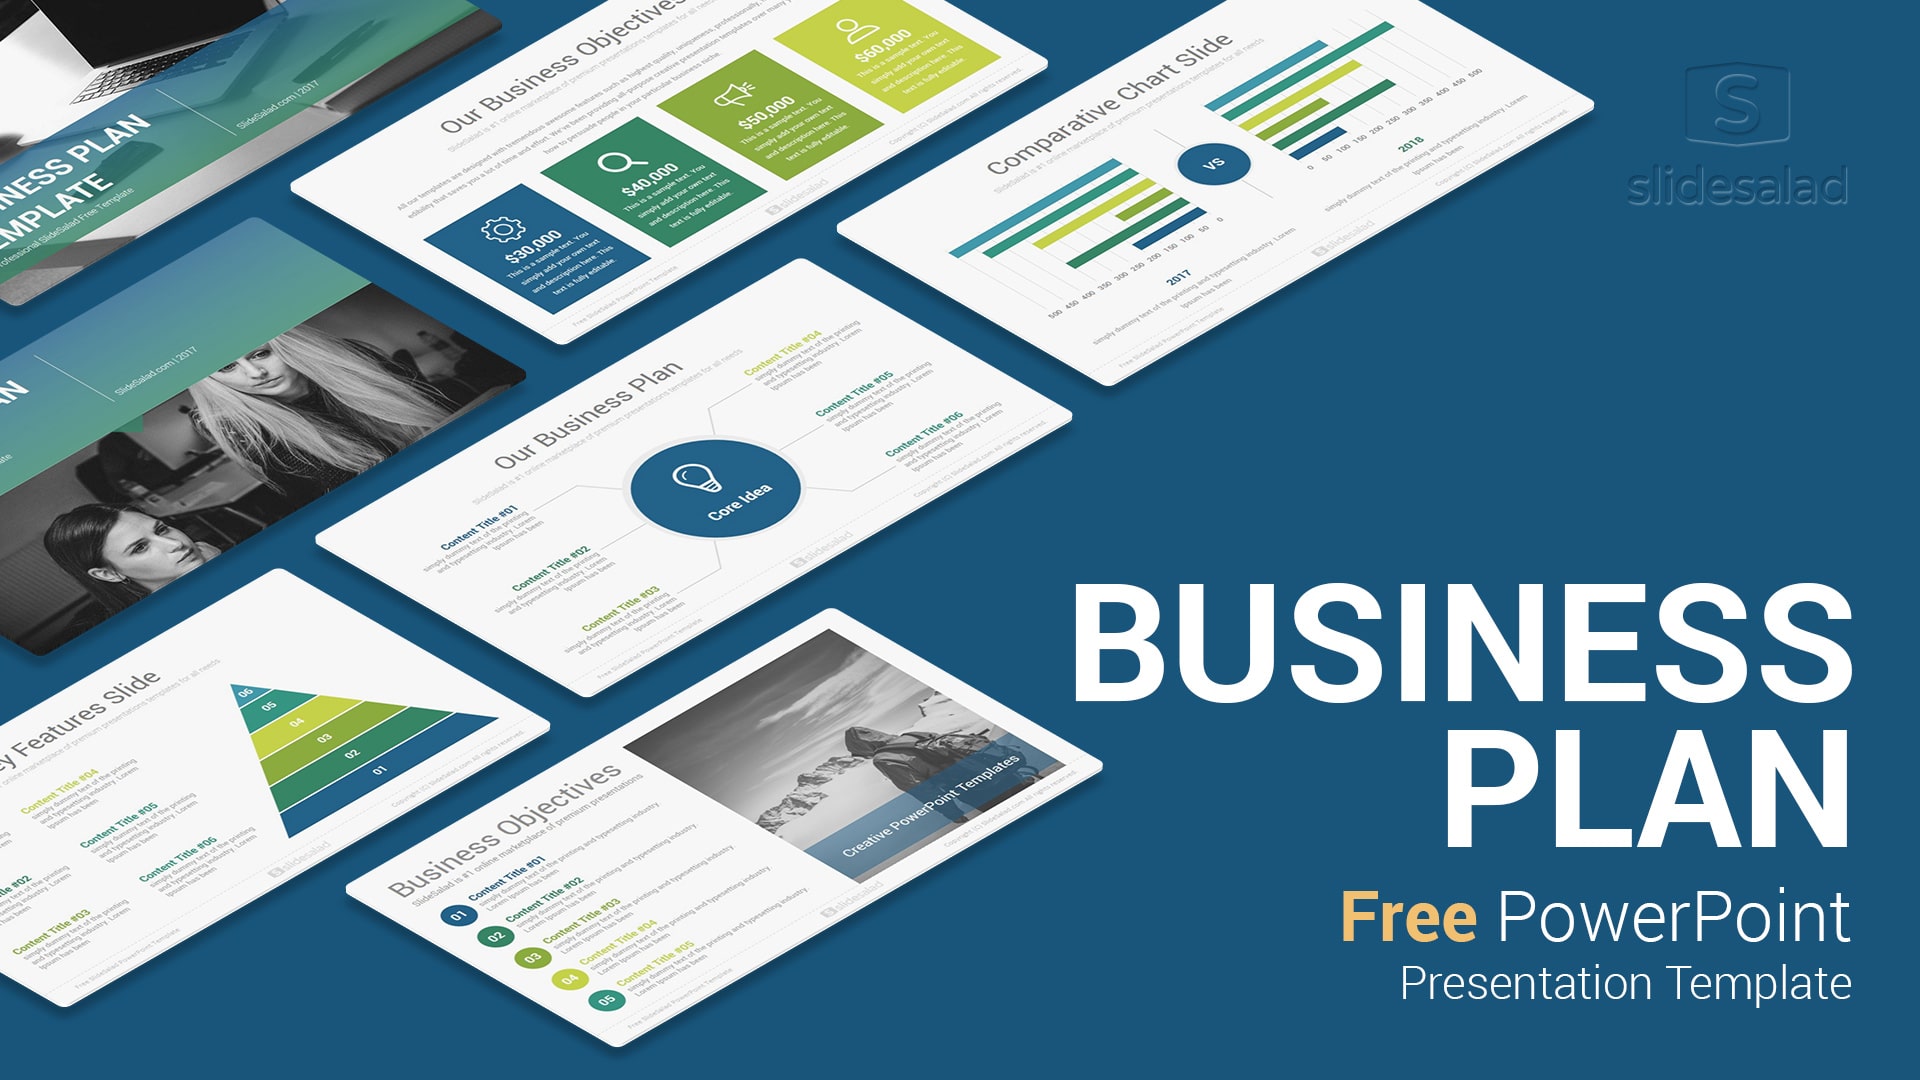 Business Plan Free PowerPoint Presentation Template - SlideSalad In Business Plan Template Powerpoint Free Download